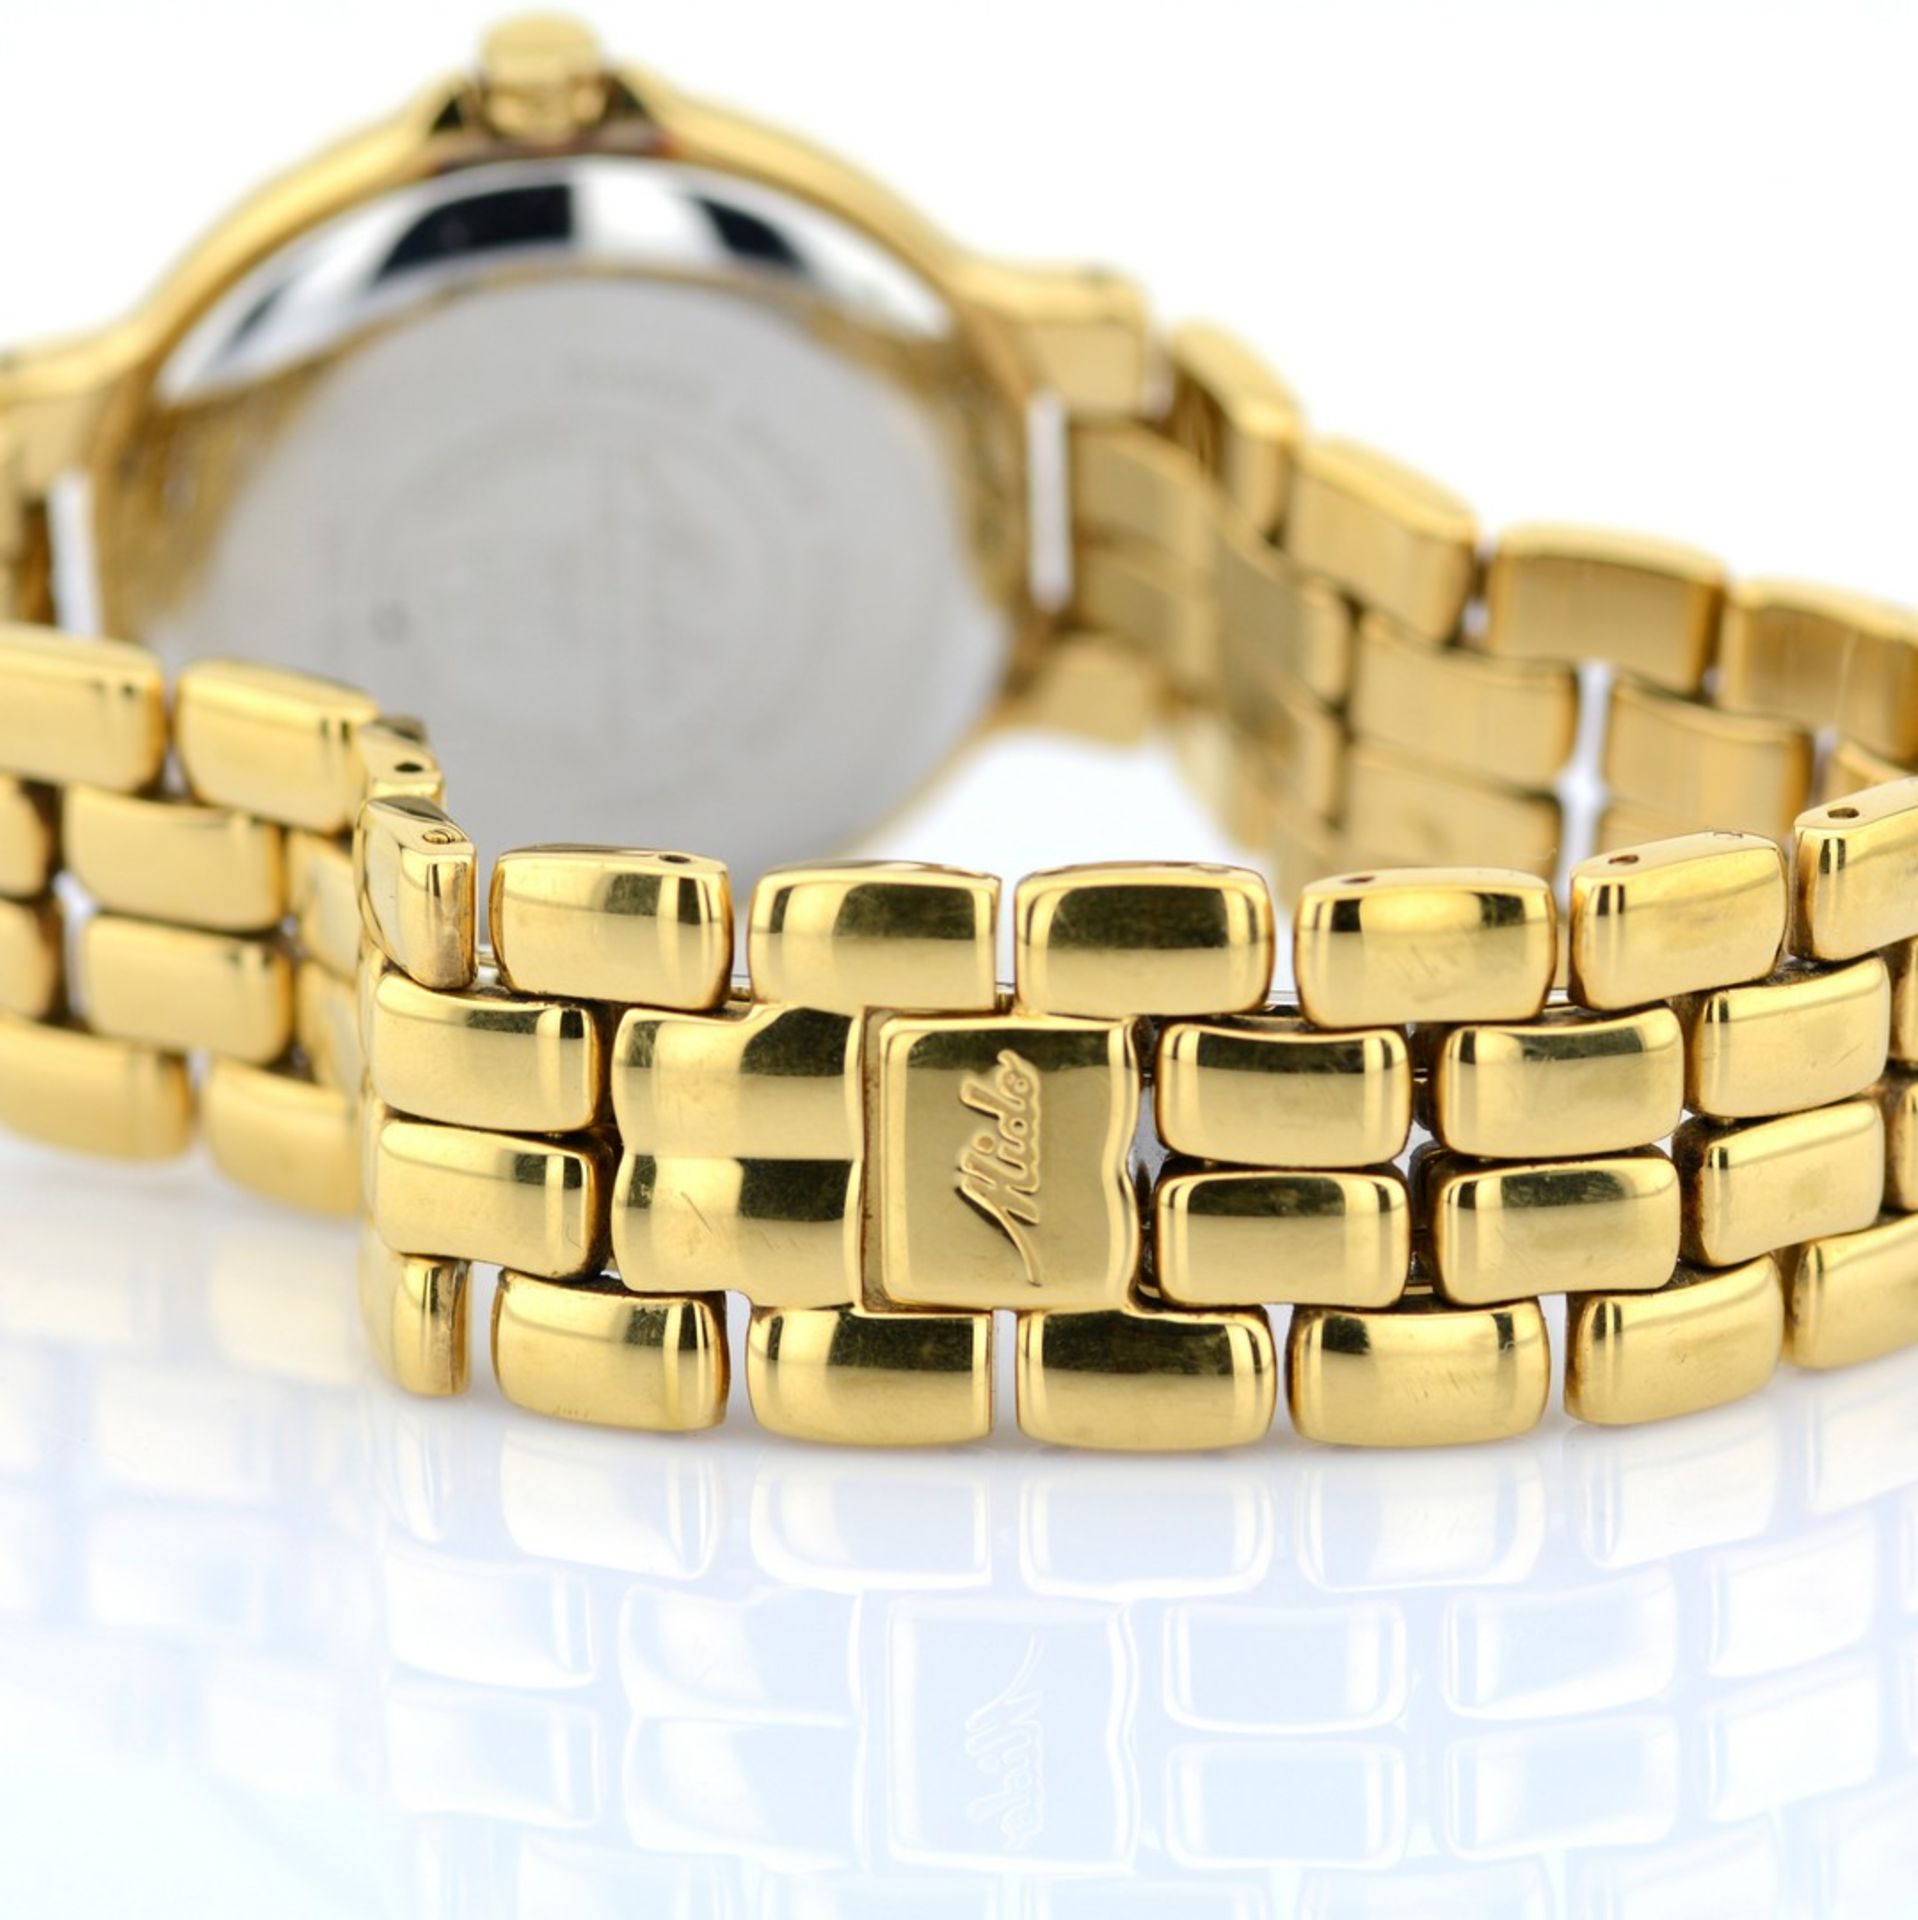 Mido / Ocean Star Automatic Date - Gentlmen's Gold-plated Wrist Watch - Image 5 of 6